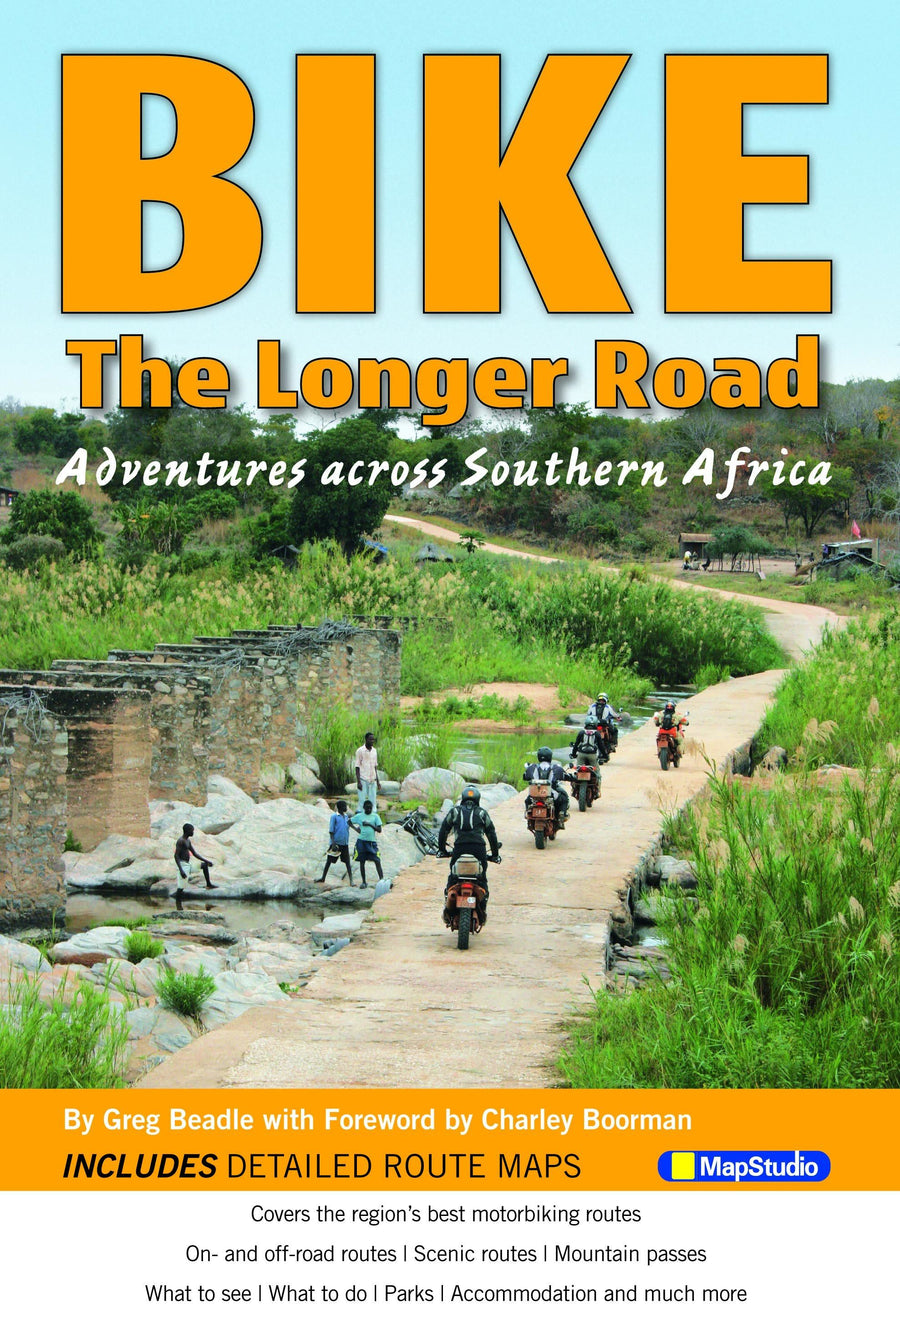 Guide vélo - The longer road: Adventures across Southern Africa | MapStudio guide vélo MapStudio 